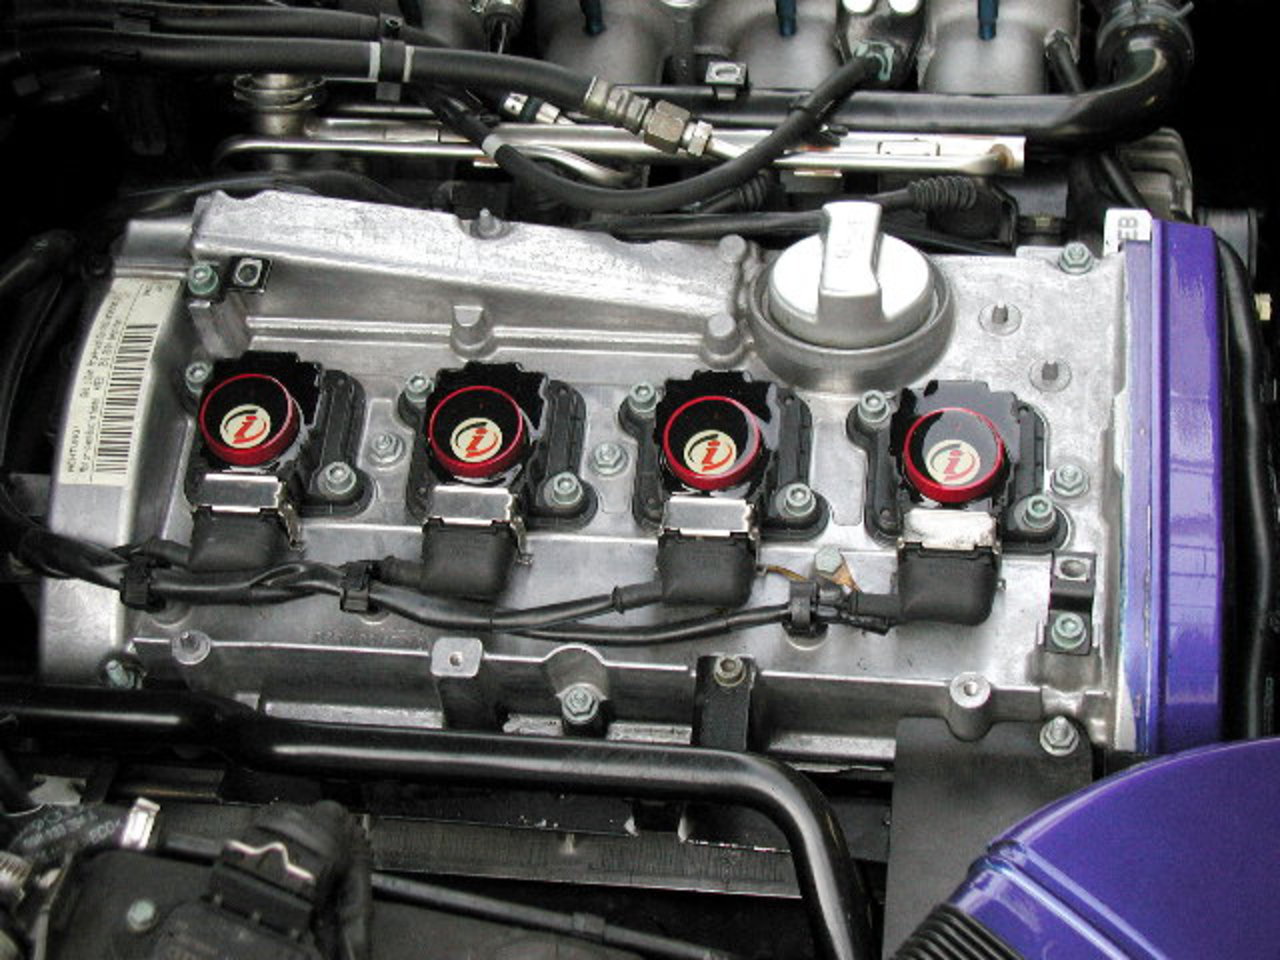 Vehicle 1999 Volkswagen Passat 20V 4 cylinder